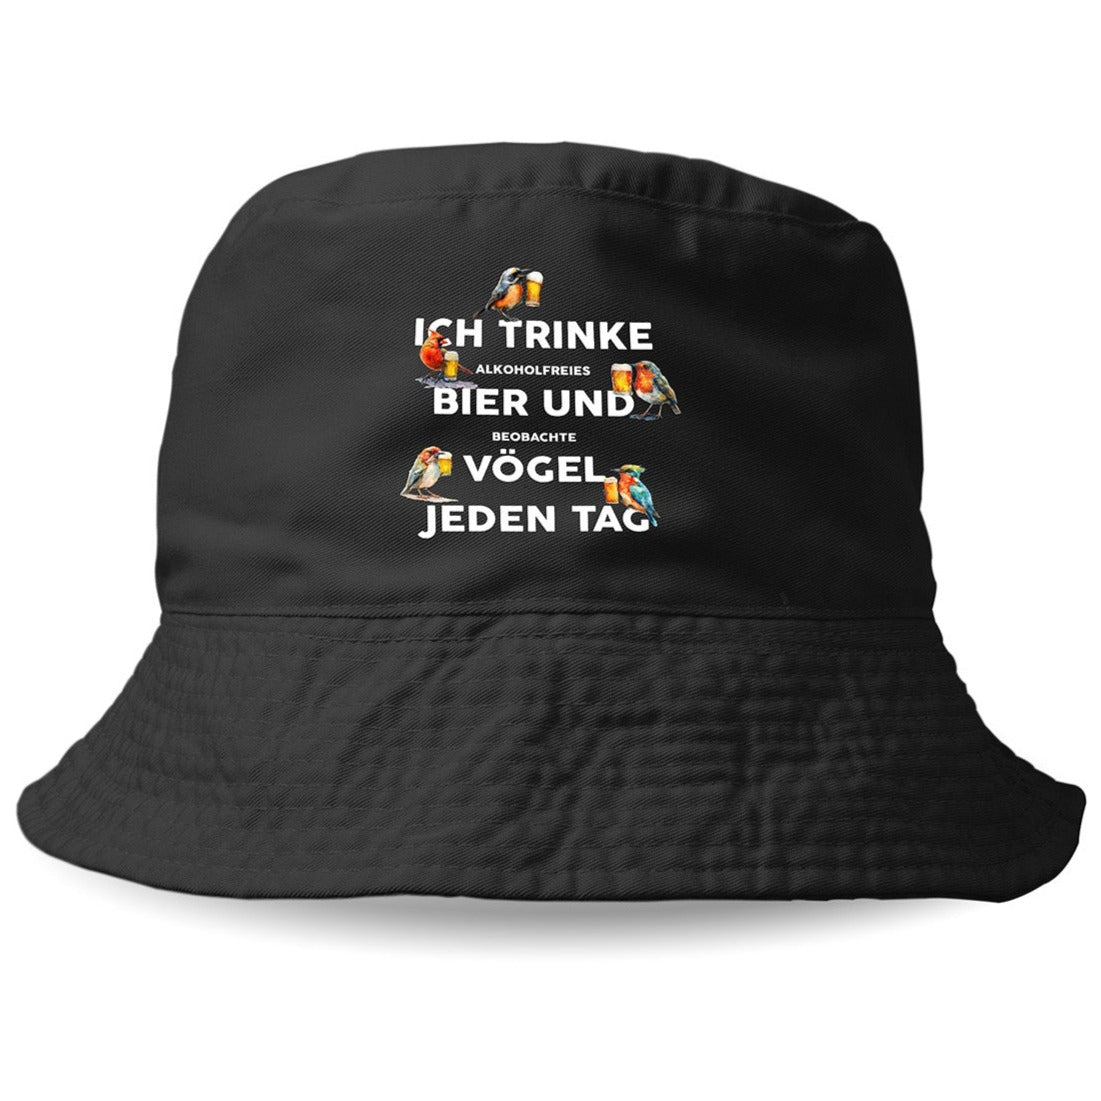 VÖGEL JEDEN TAG - Bucket Hat